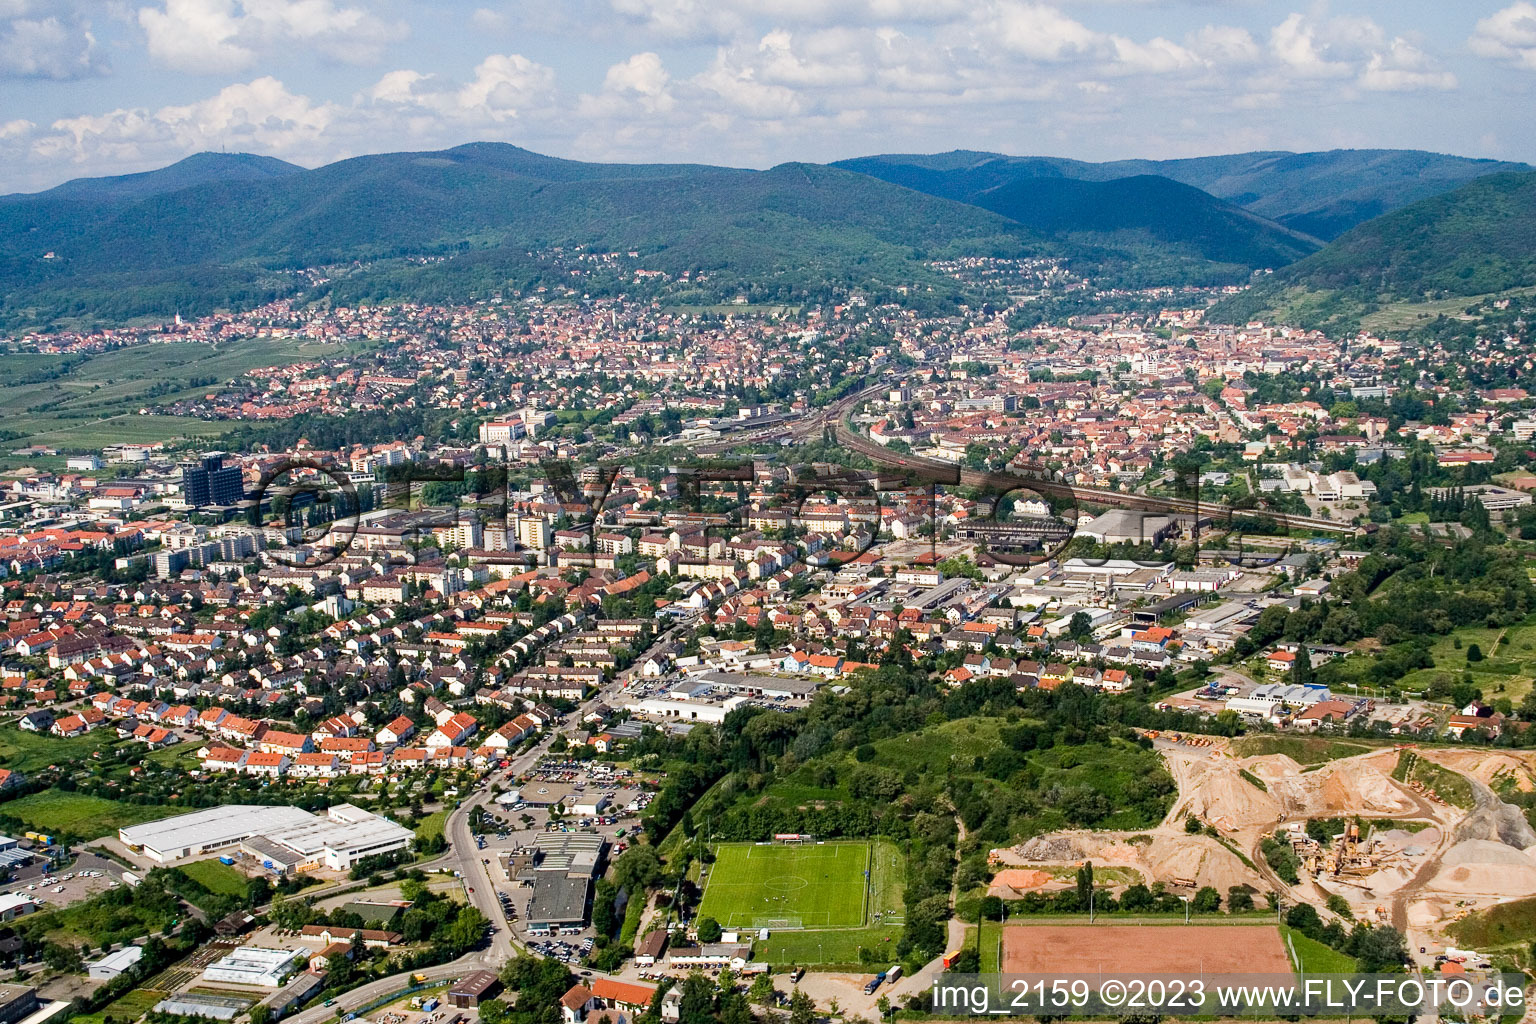 Oblique view of Neustadt an der Weinstraße in the state Rhineland-Palatinate, Germany